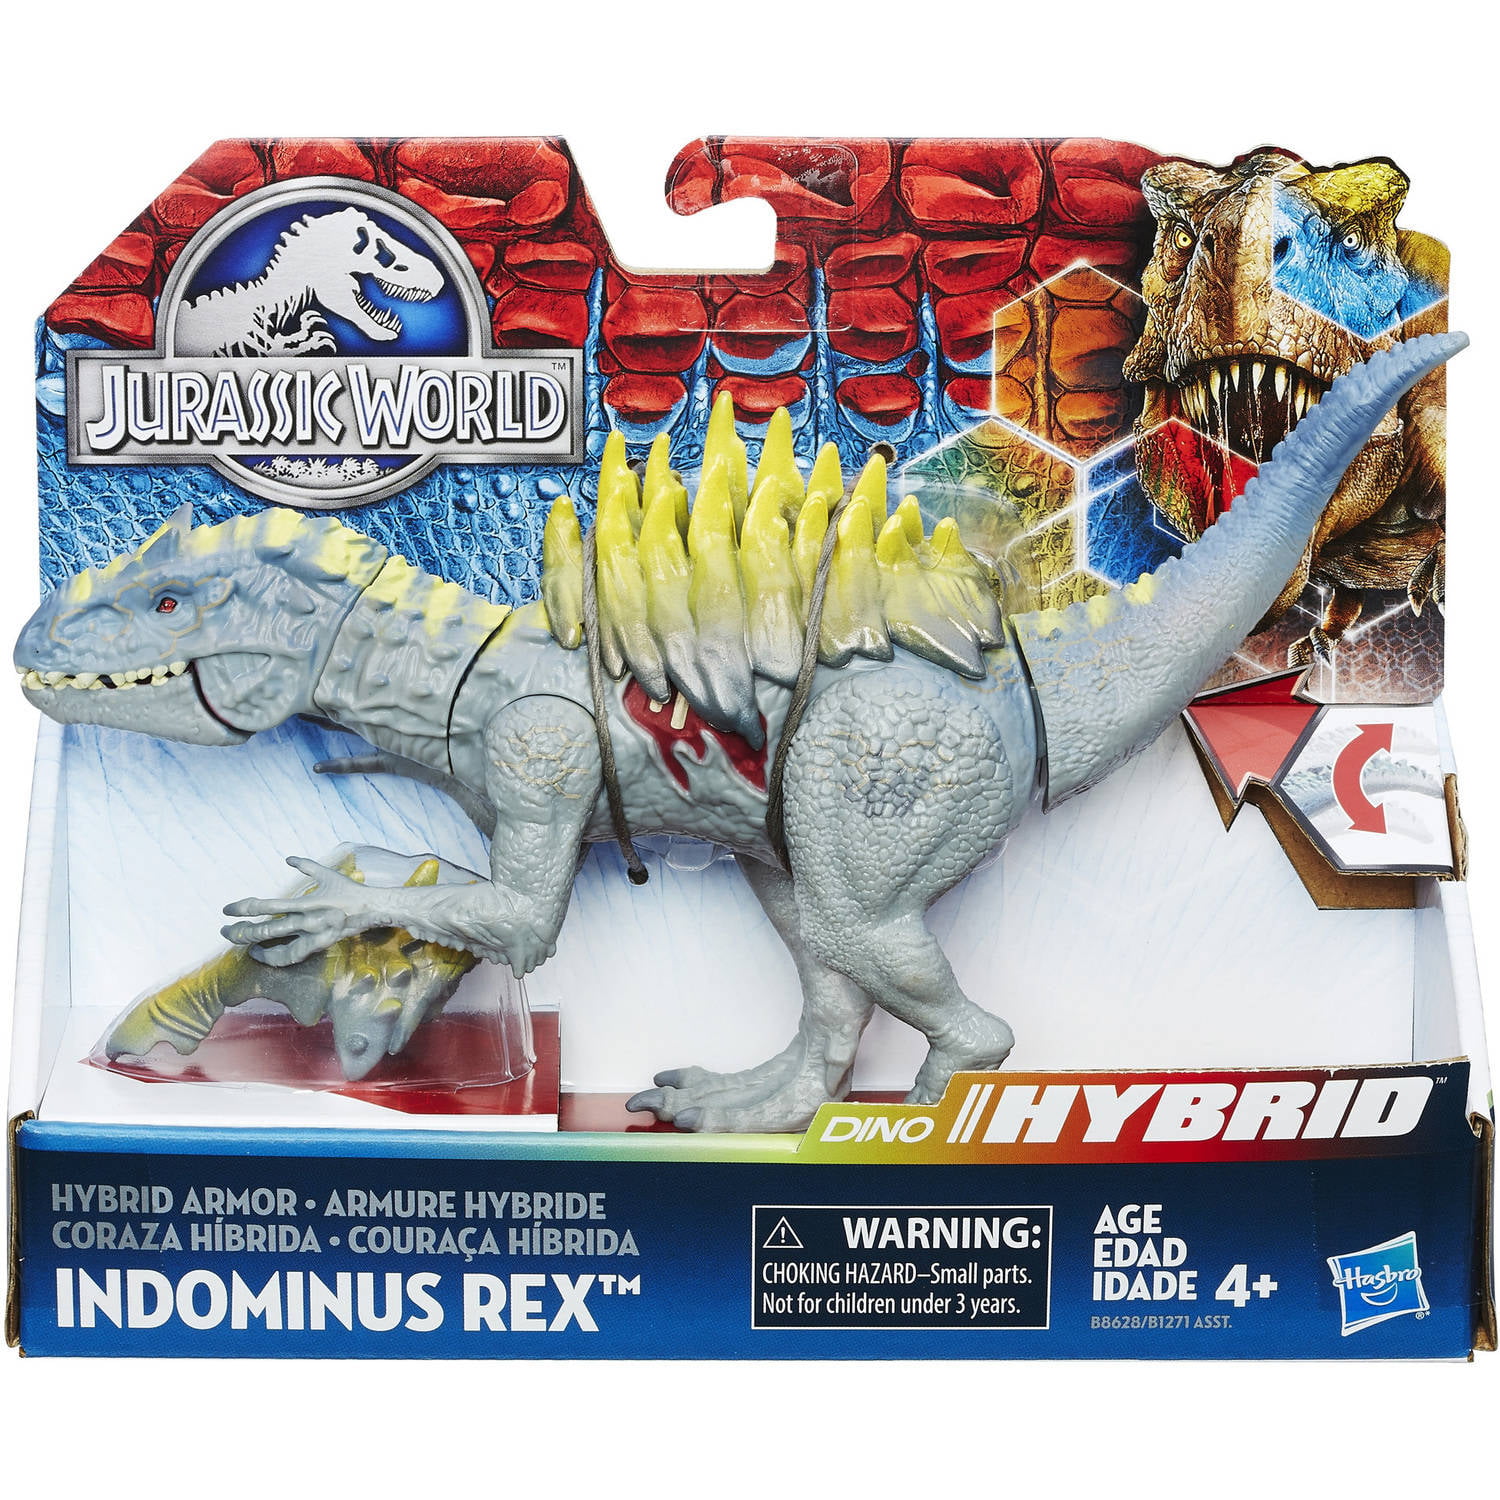 Armored T-Rex Toy, Dinosaur Toys